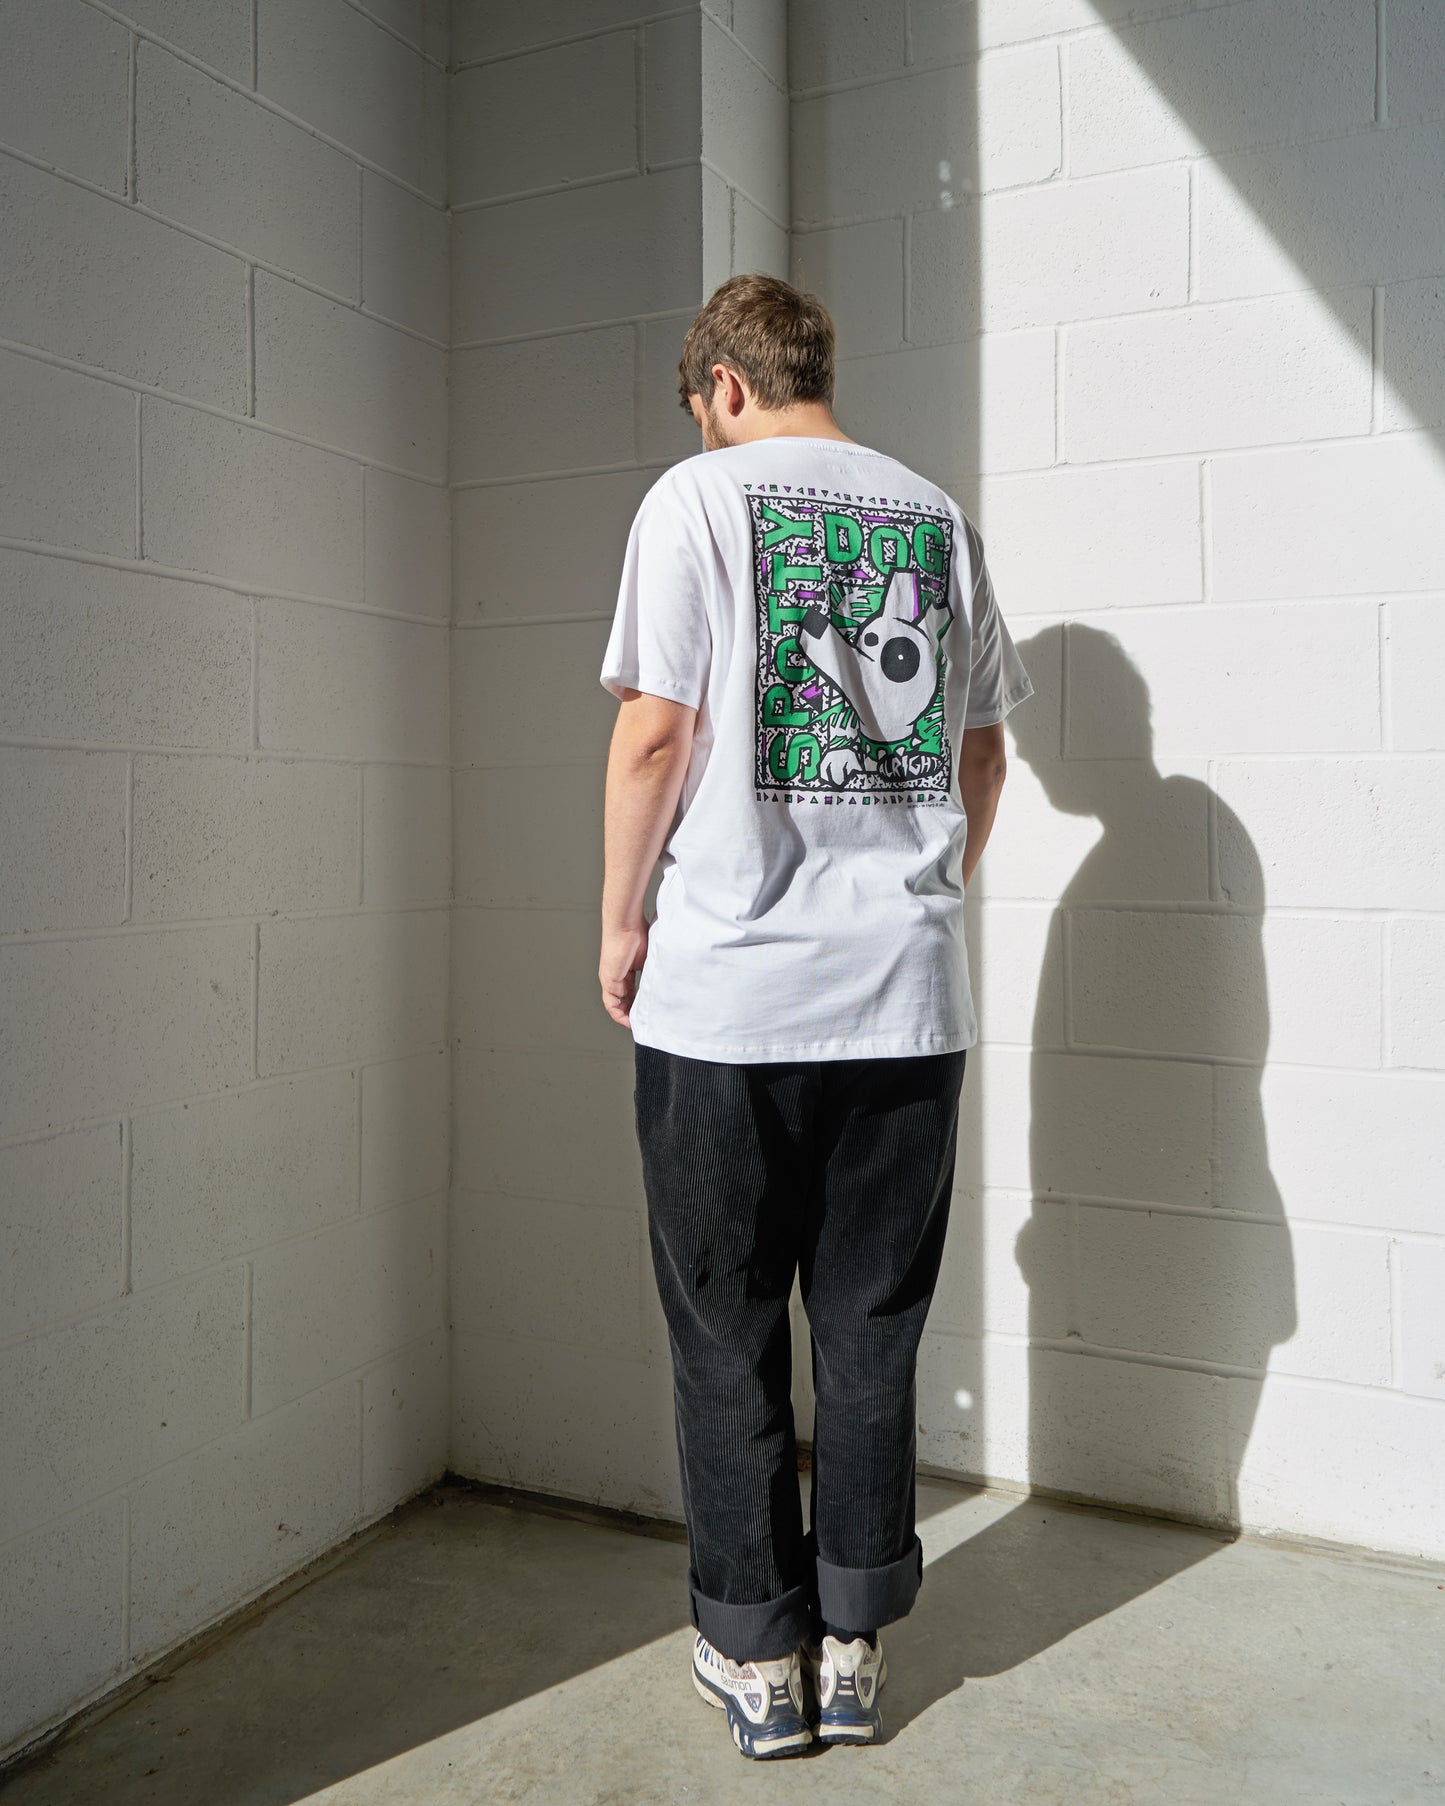 Loco Labs x Spotty Dog T-Shirt (Tom Moyse)